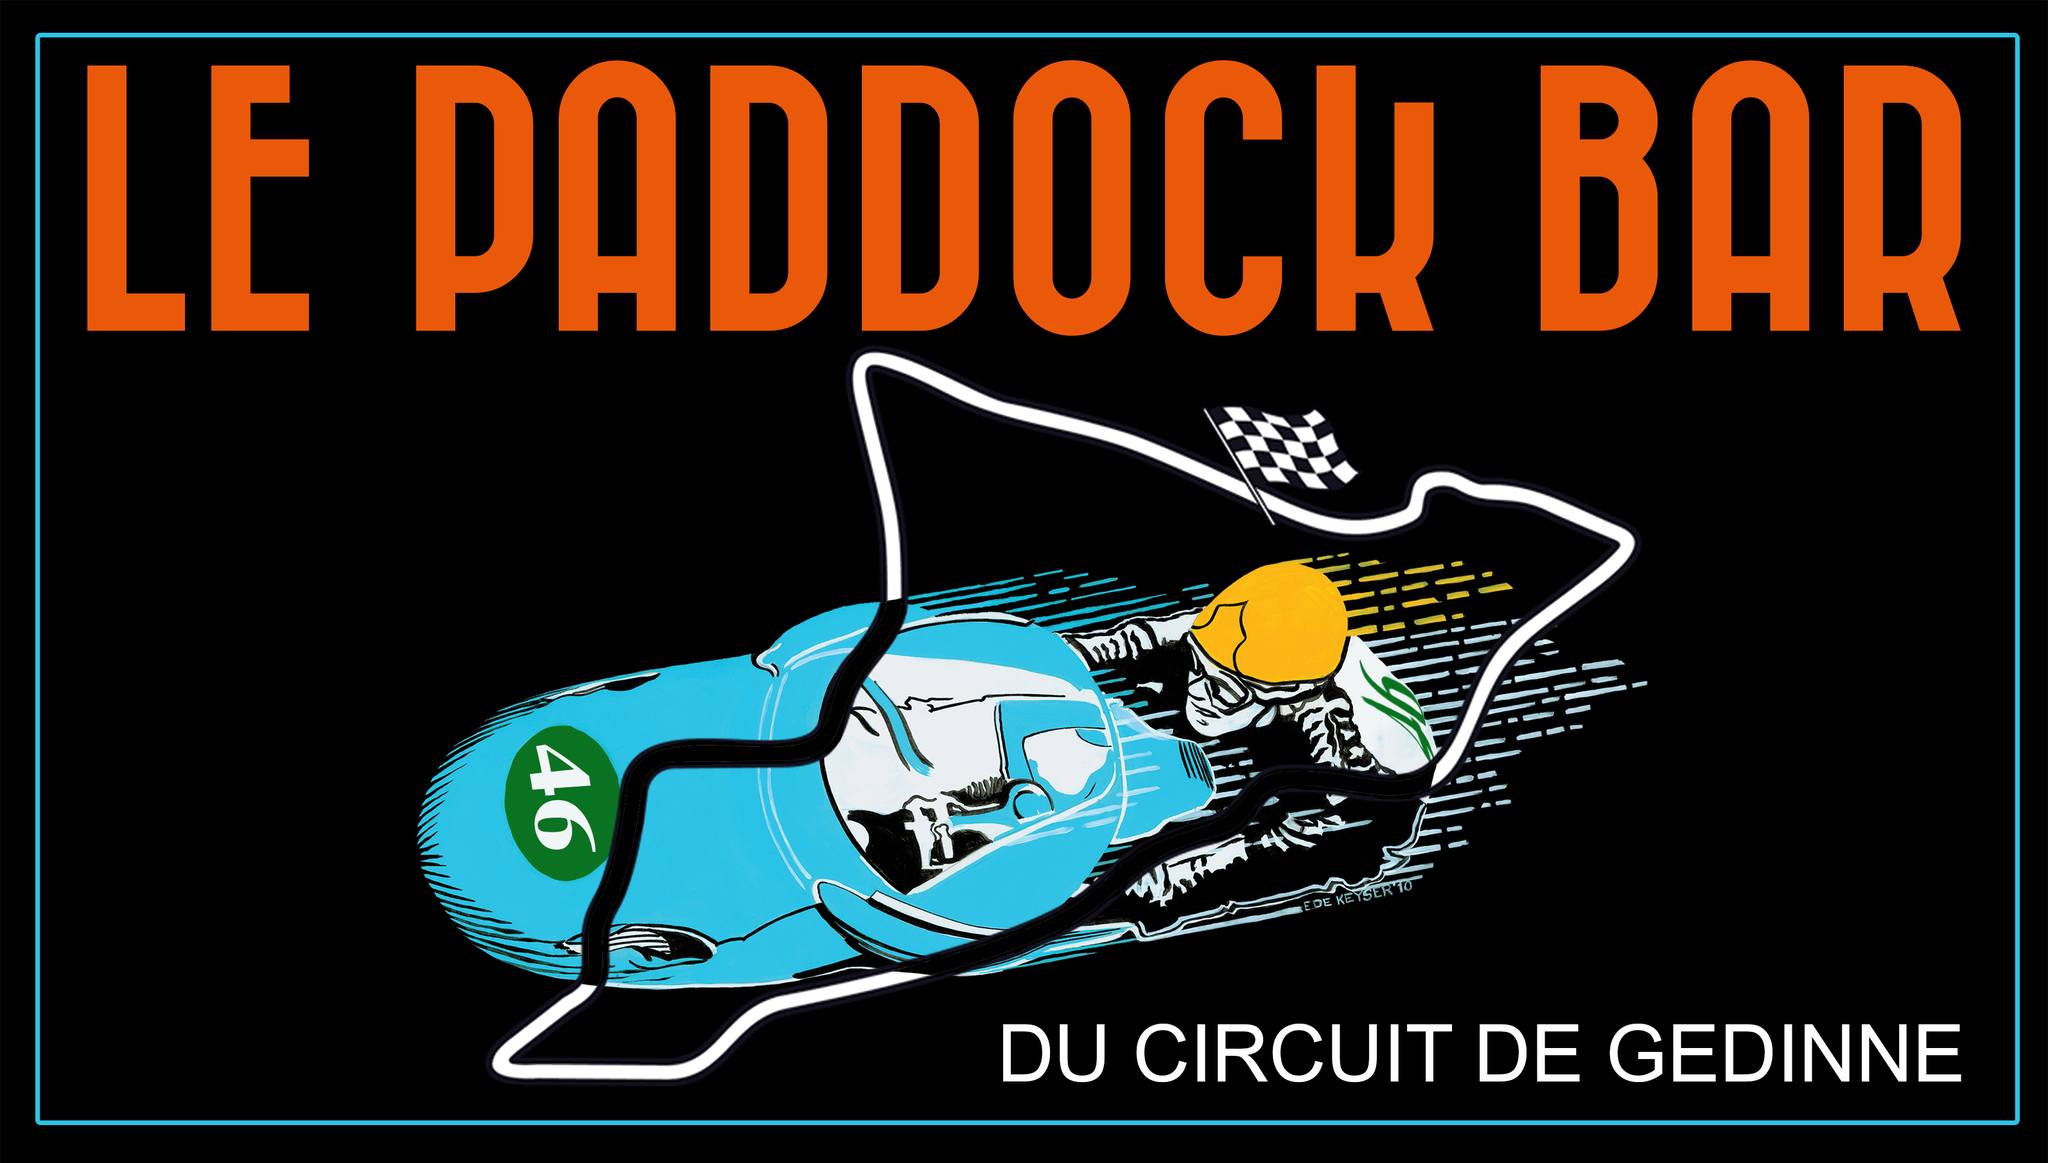 Le Paddock Bar du Circuit de Gedinne